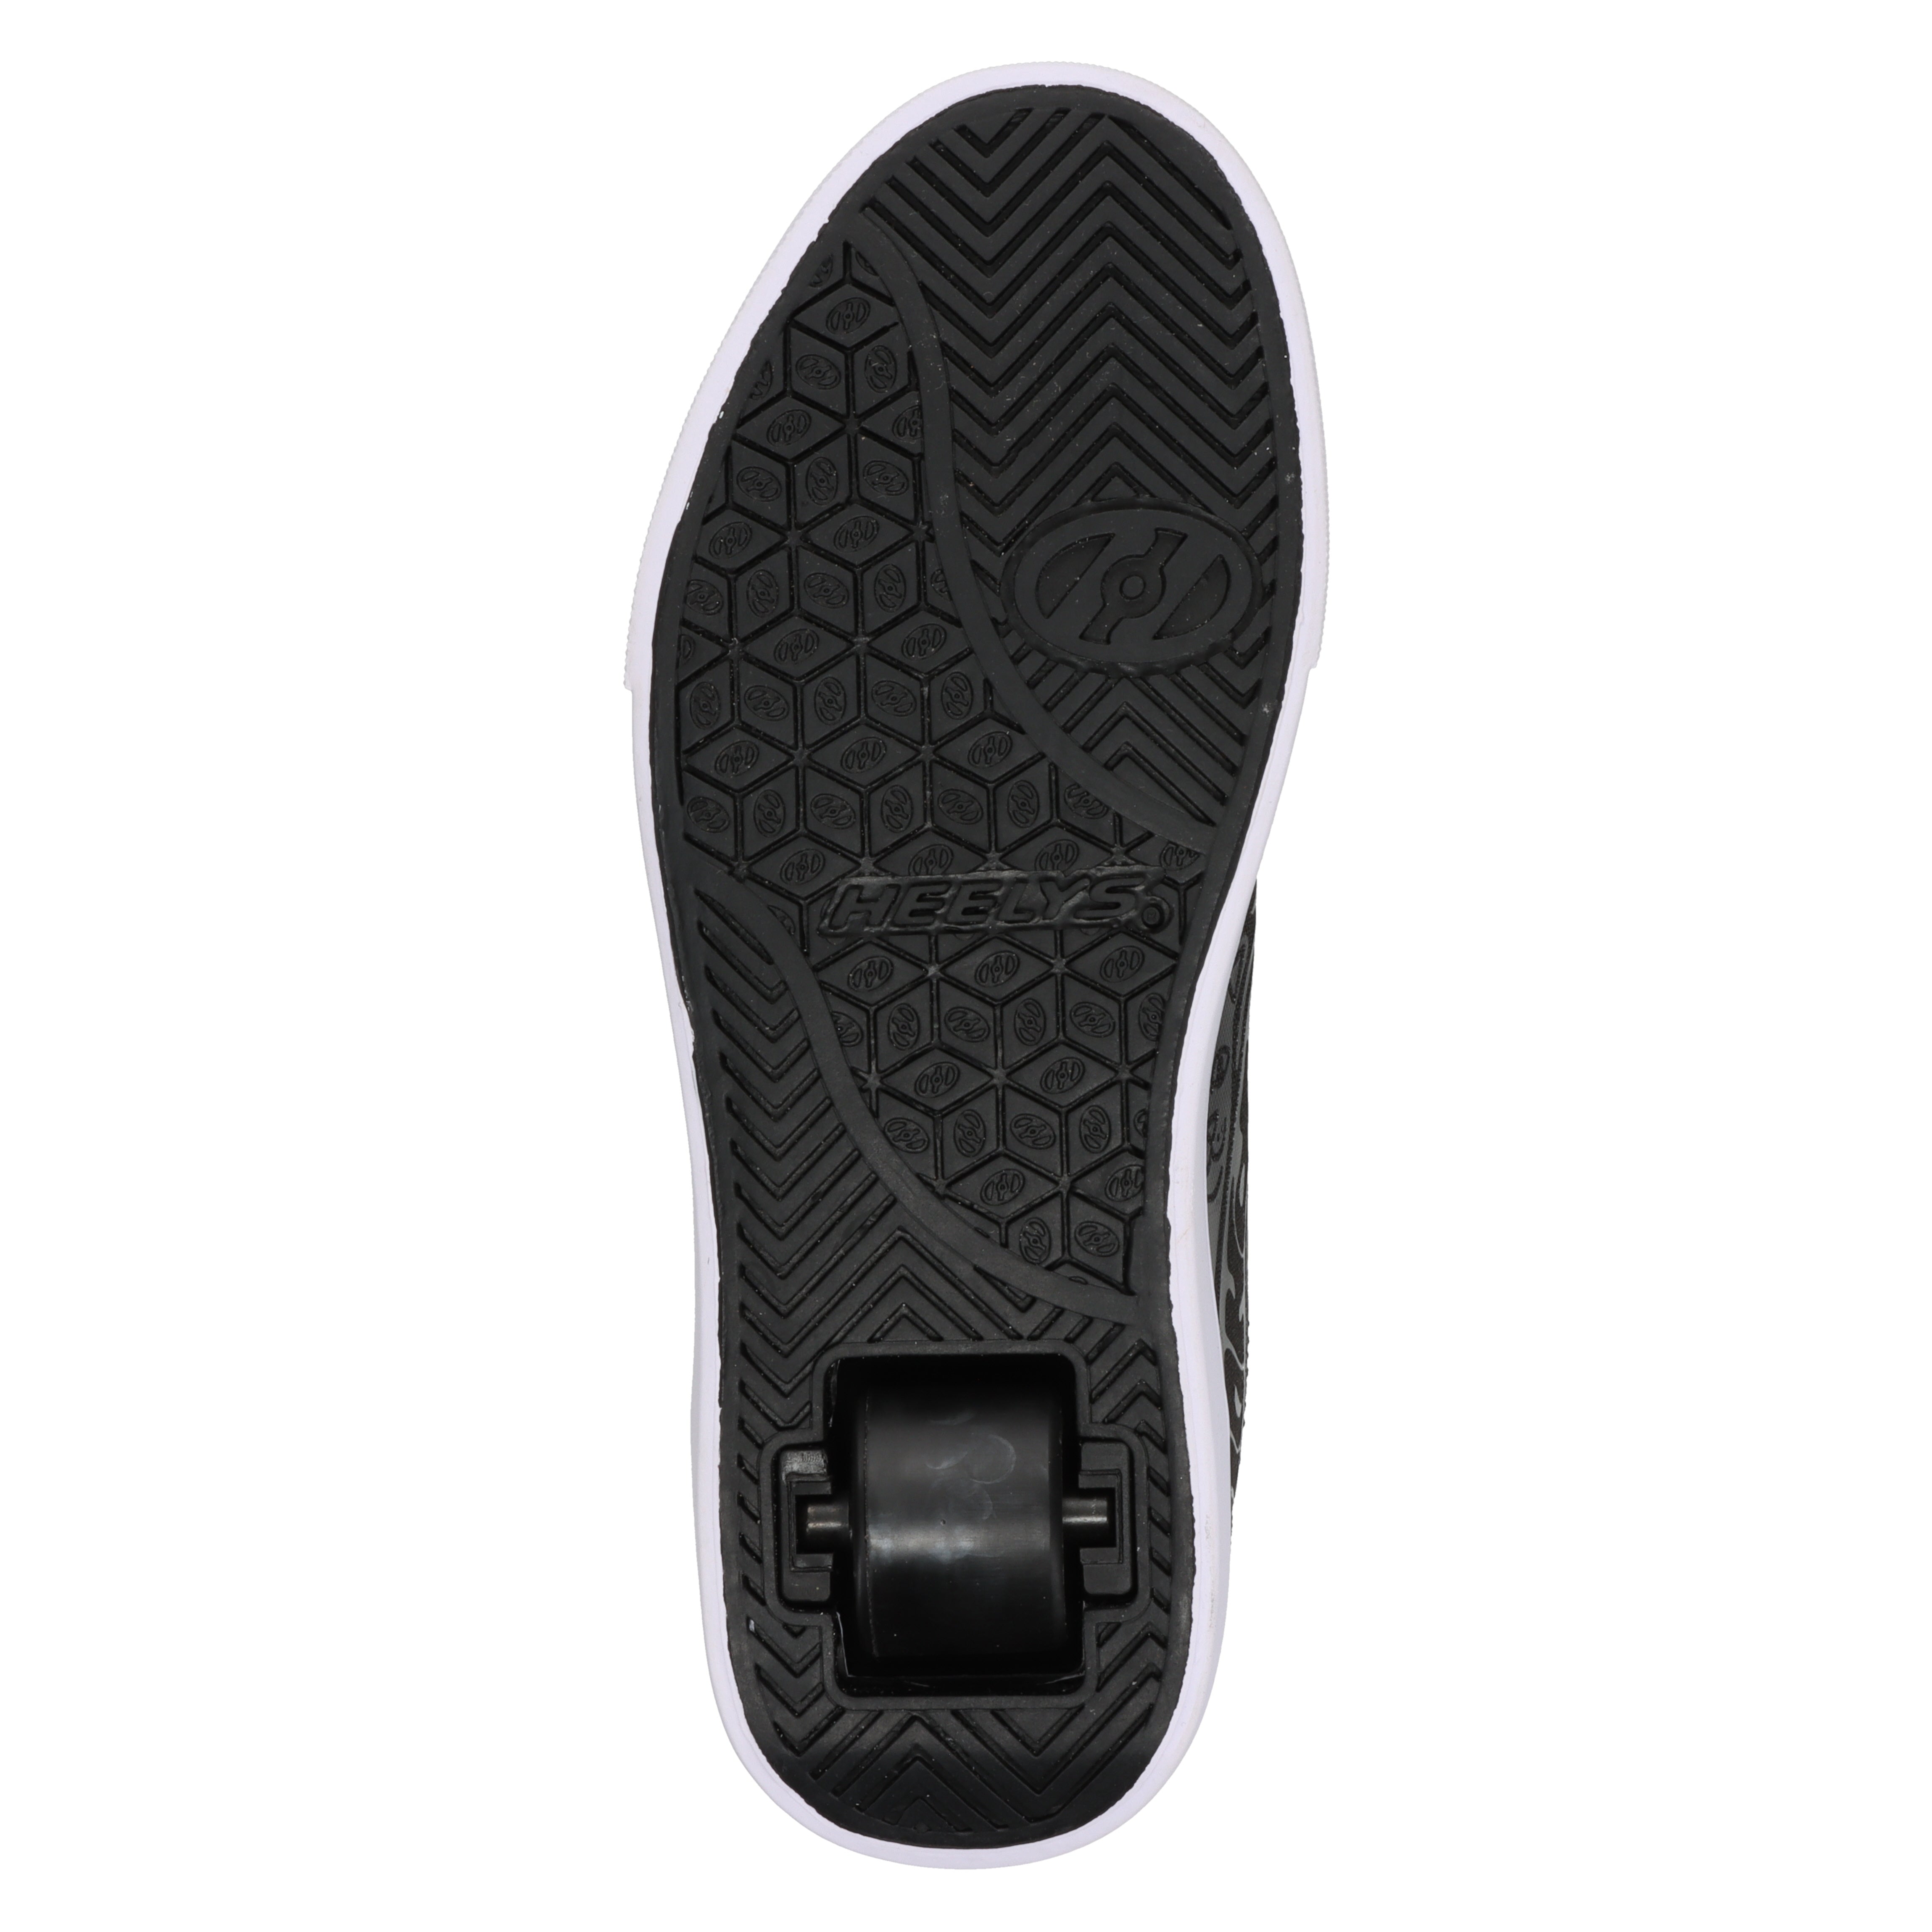 RIPNDIP Pro 20 Heelys Shoes (Black/White/Neon Green)